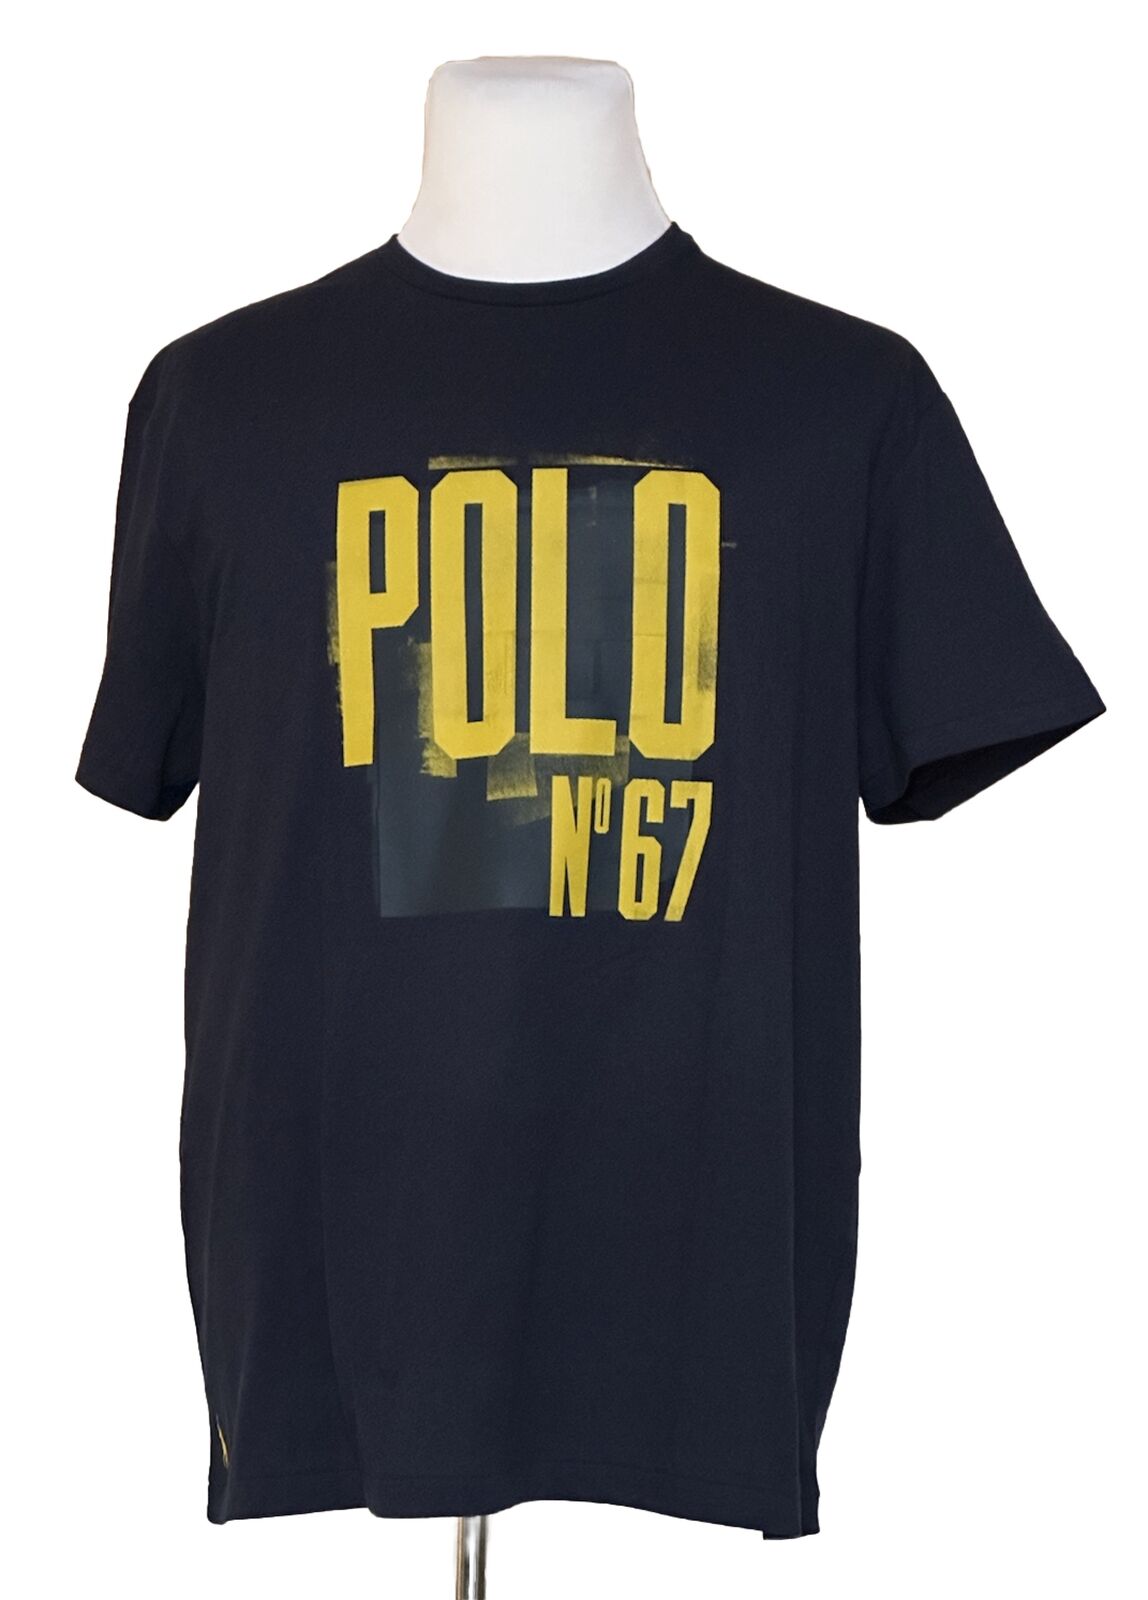 Мужская синяя футболка с коротким рукавом NWT Polo Ralph Lauren POLO 67, большой размер